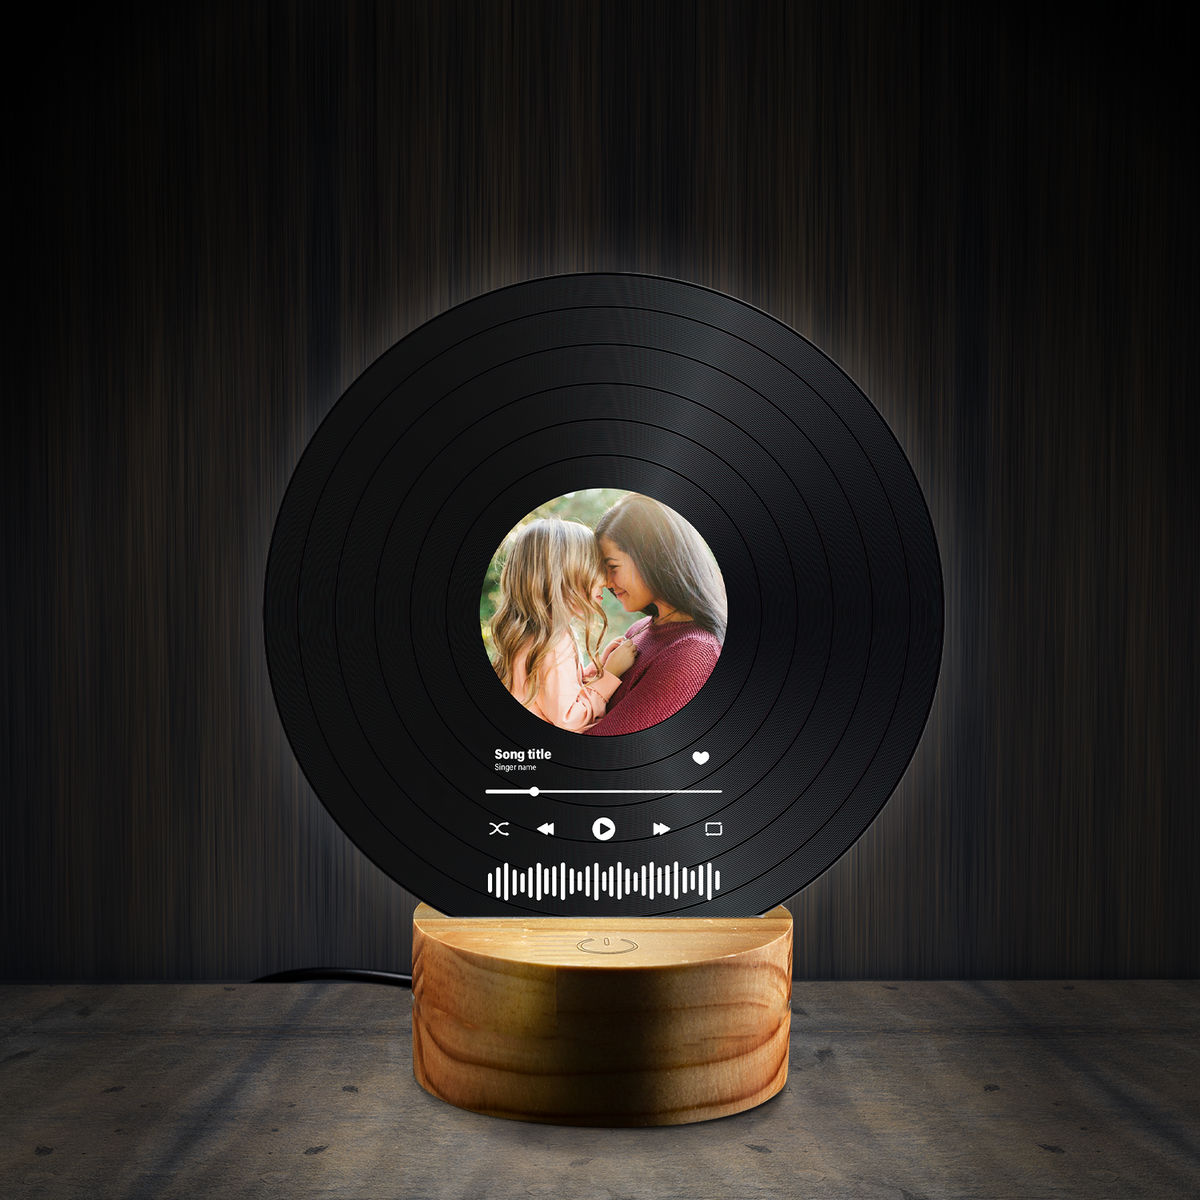 Personalized Record Display Night Light Anniversary Gift Music Record Gift Vinyl Record Night Light Music Lovers Light Gift 25130